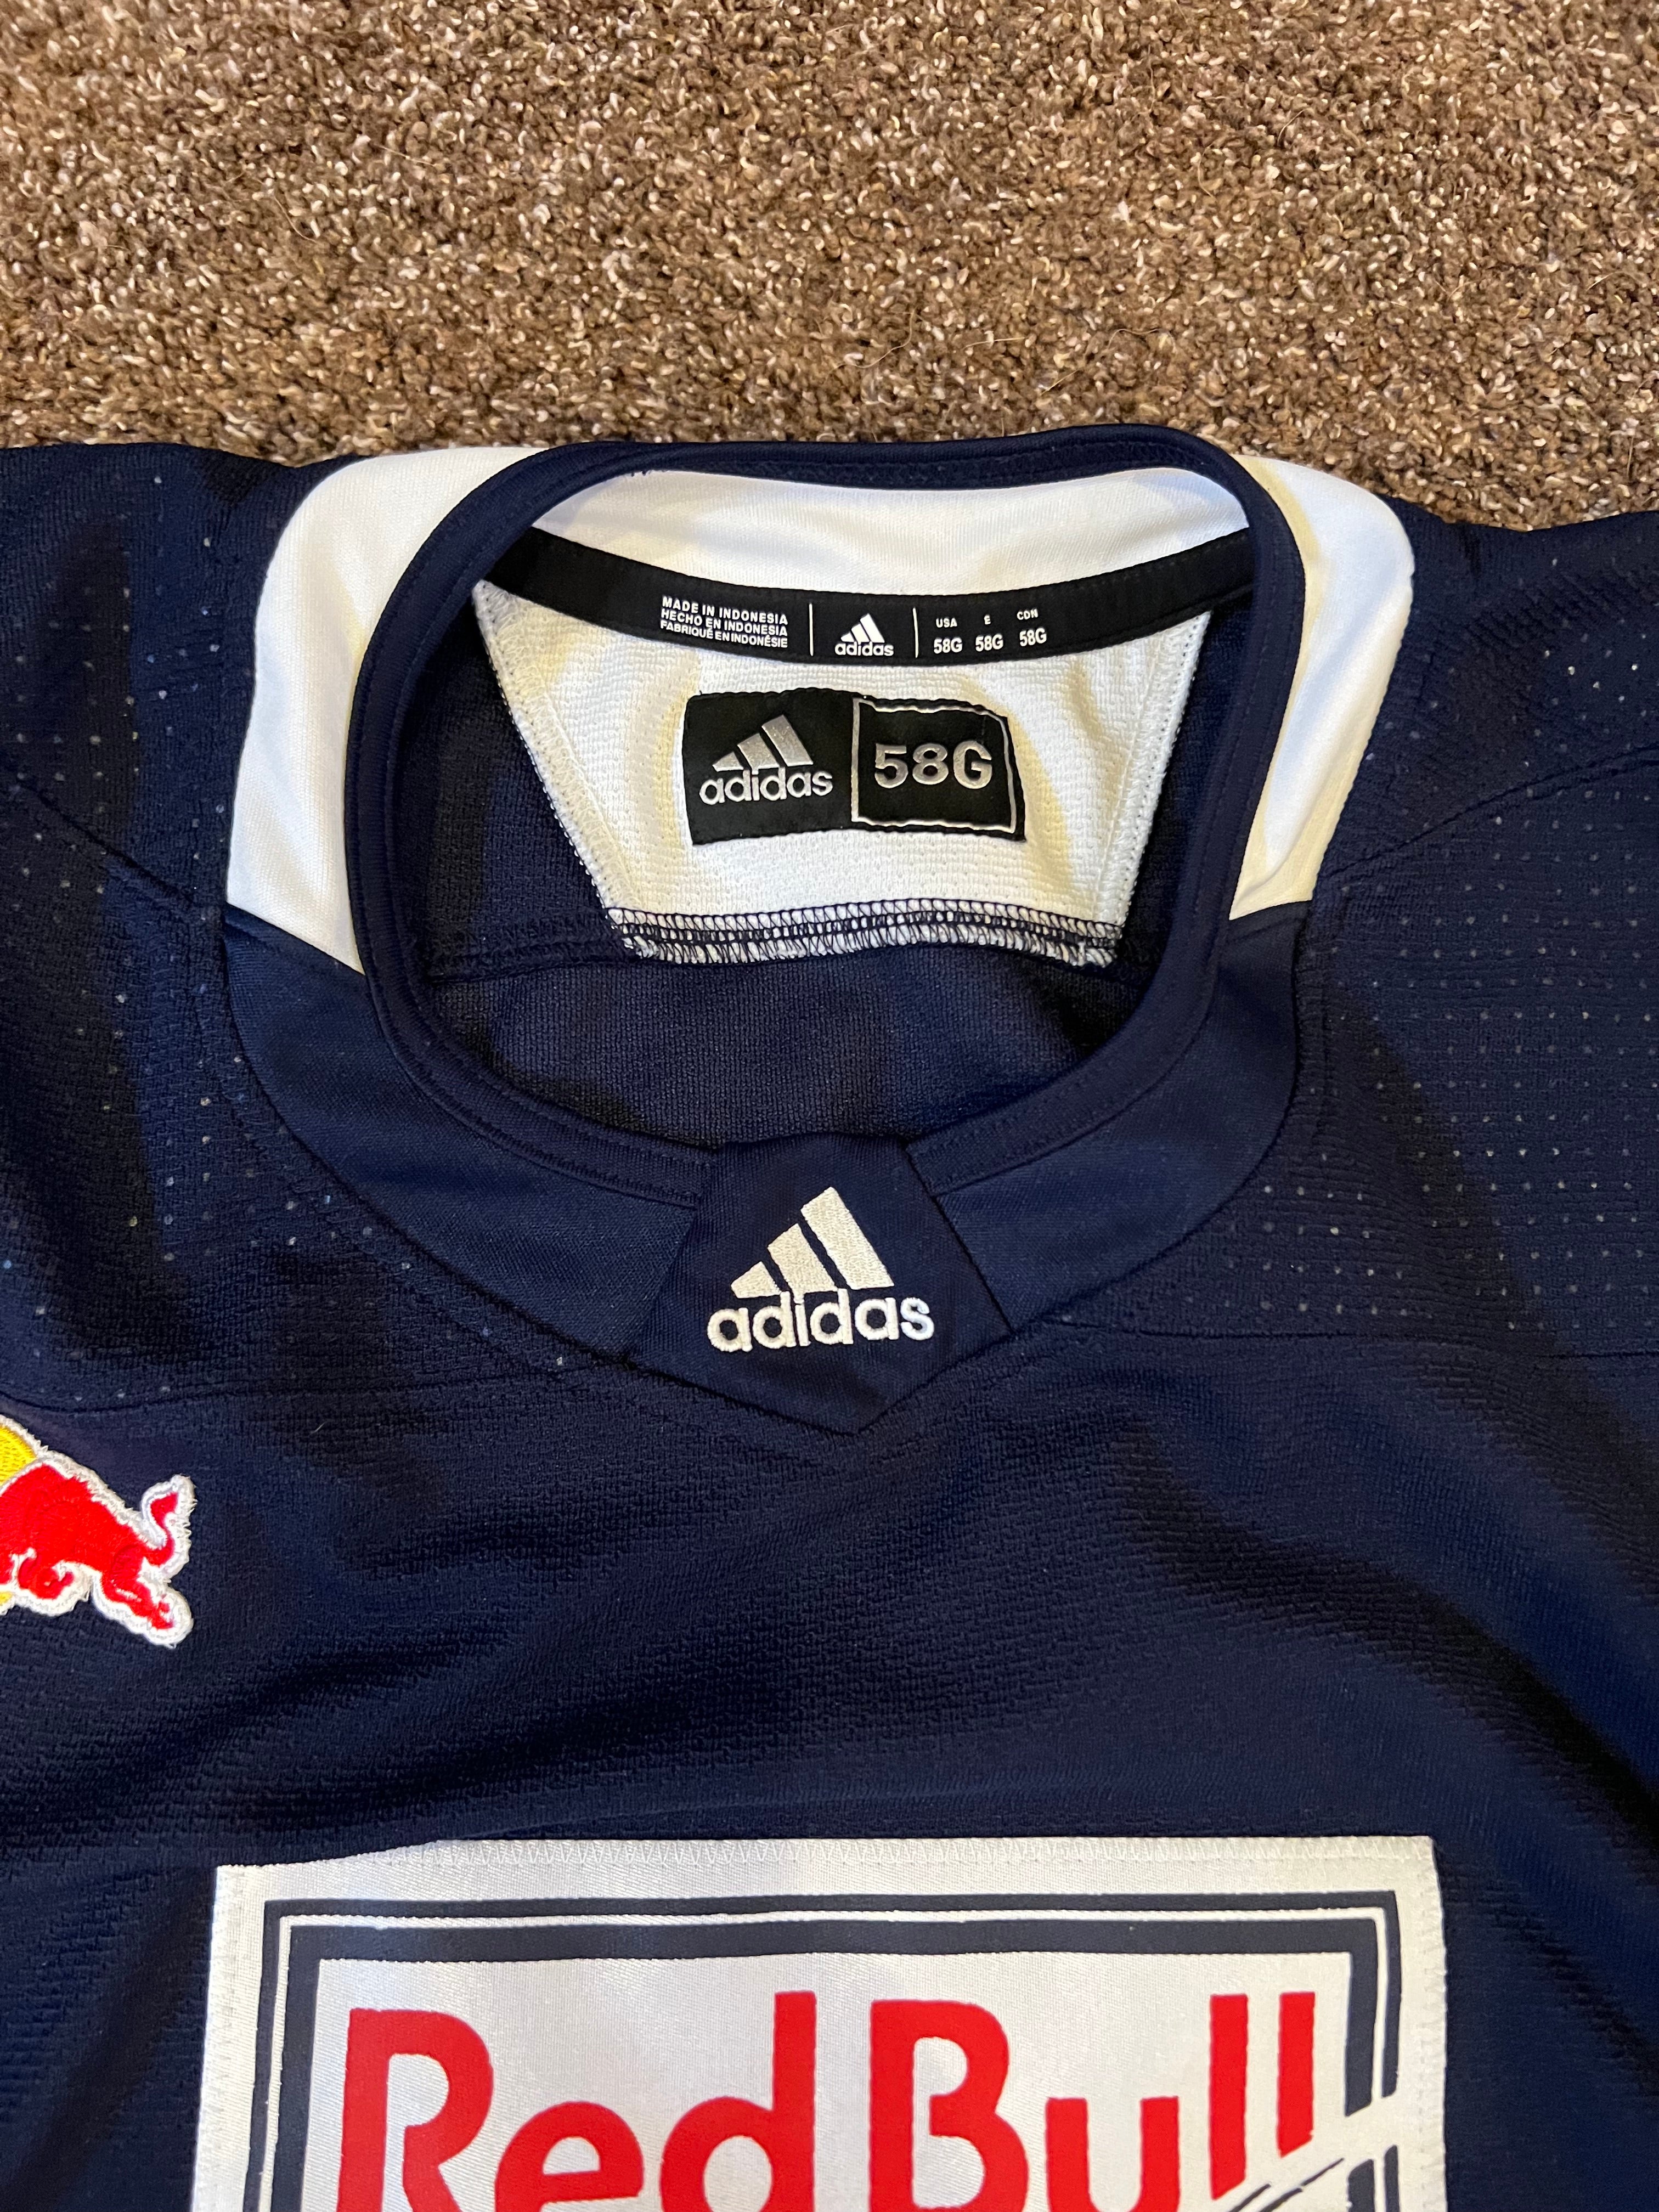 Red Bull Munich Blue Used Goalie Cut Adult Unisex Adidas Practice Jersey  58G